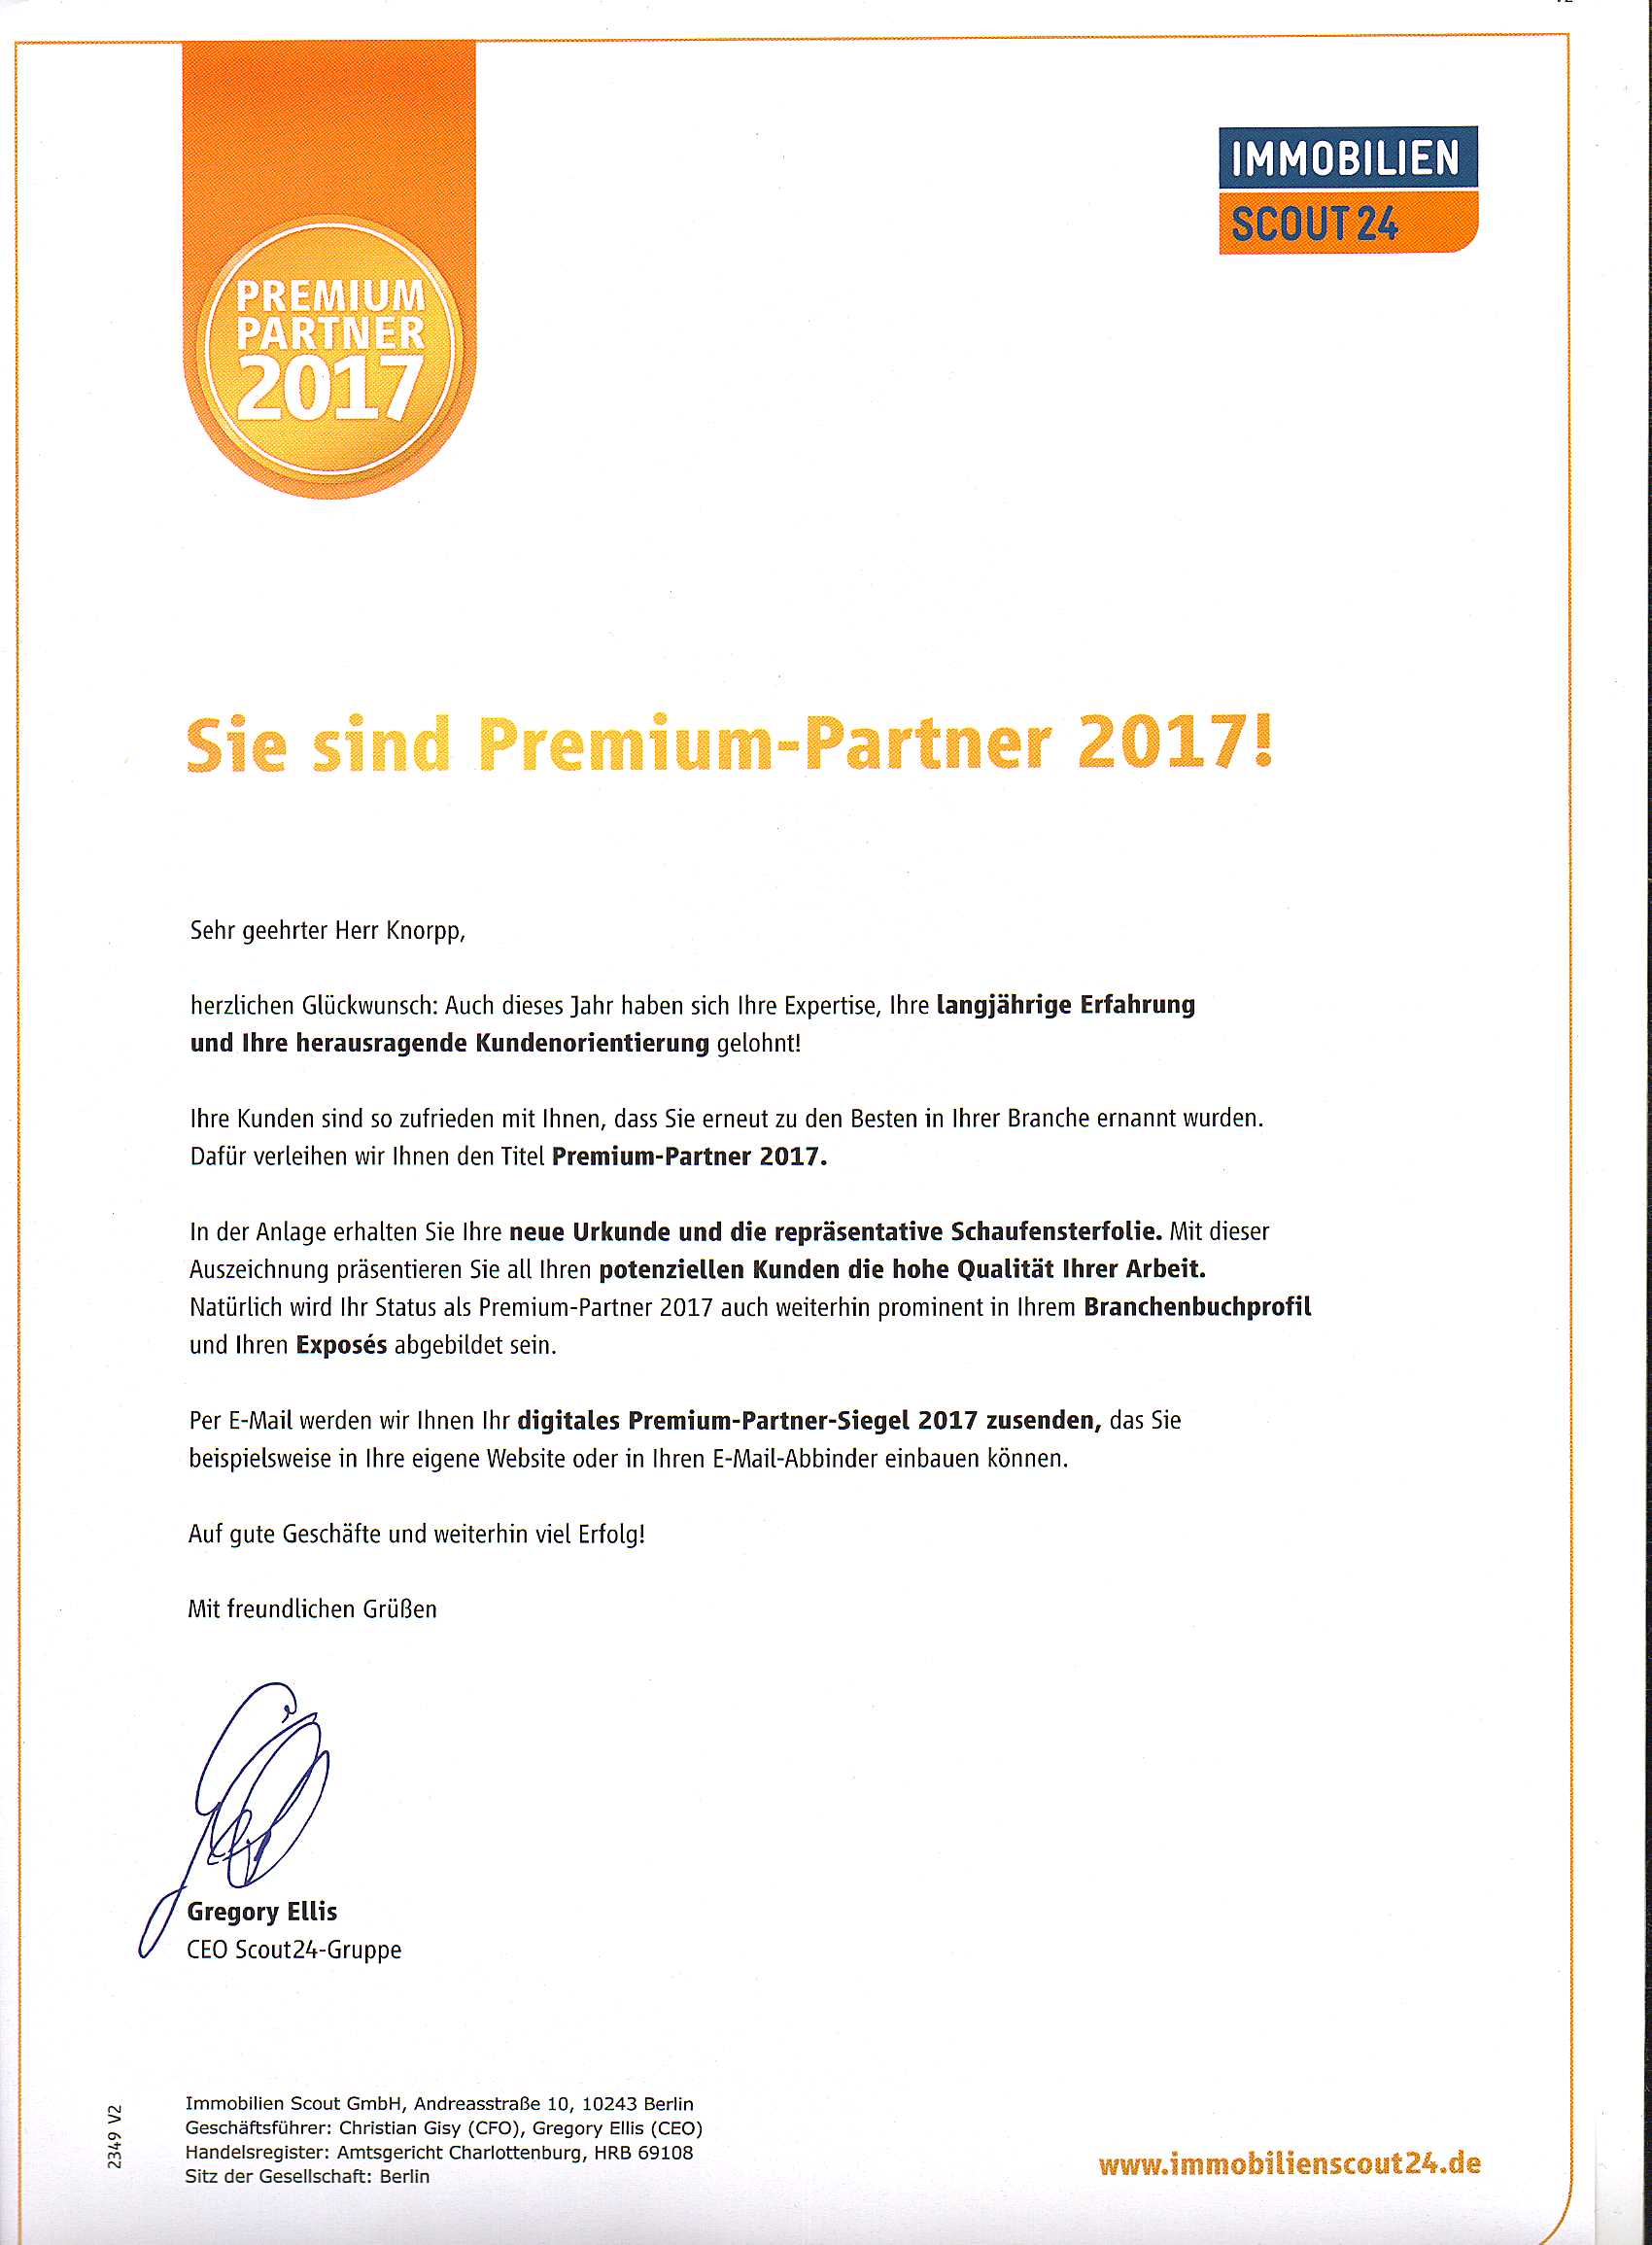 Zertifizierung Immobilien Scout 24 zum Premium-Partner 2017